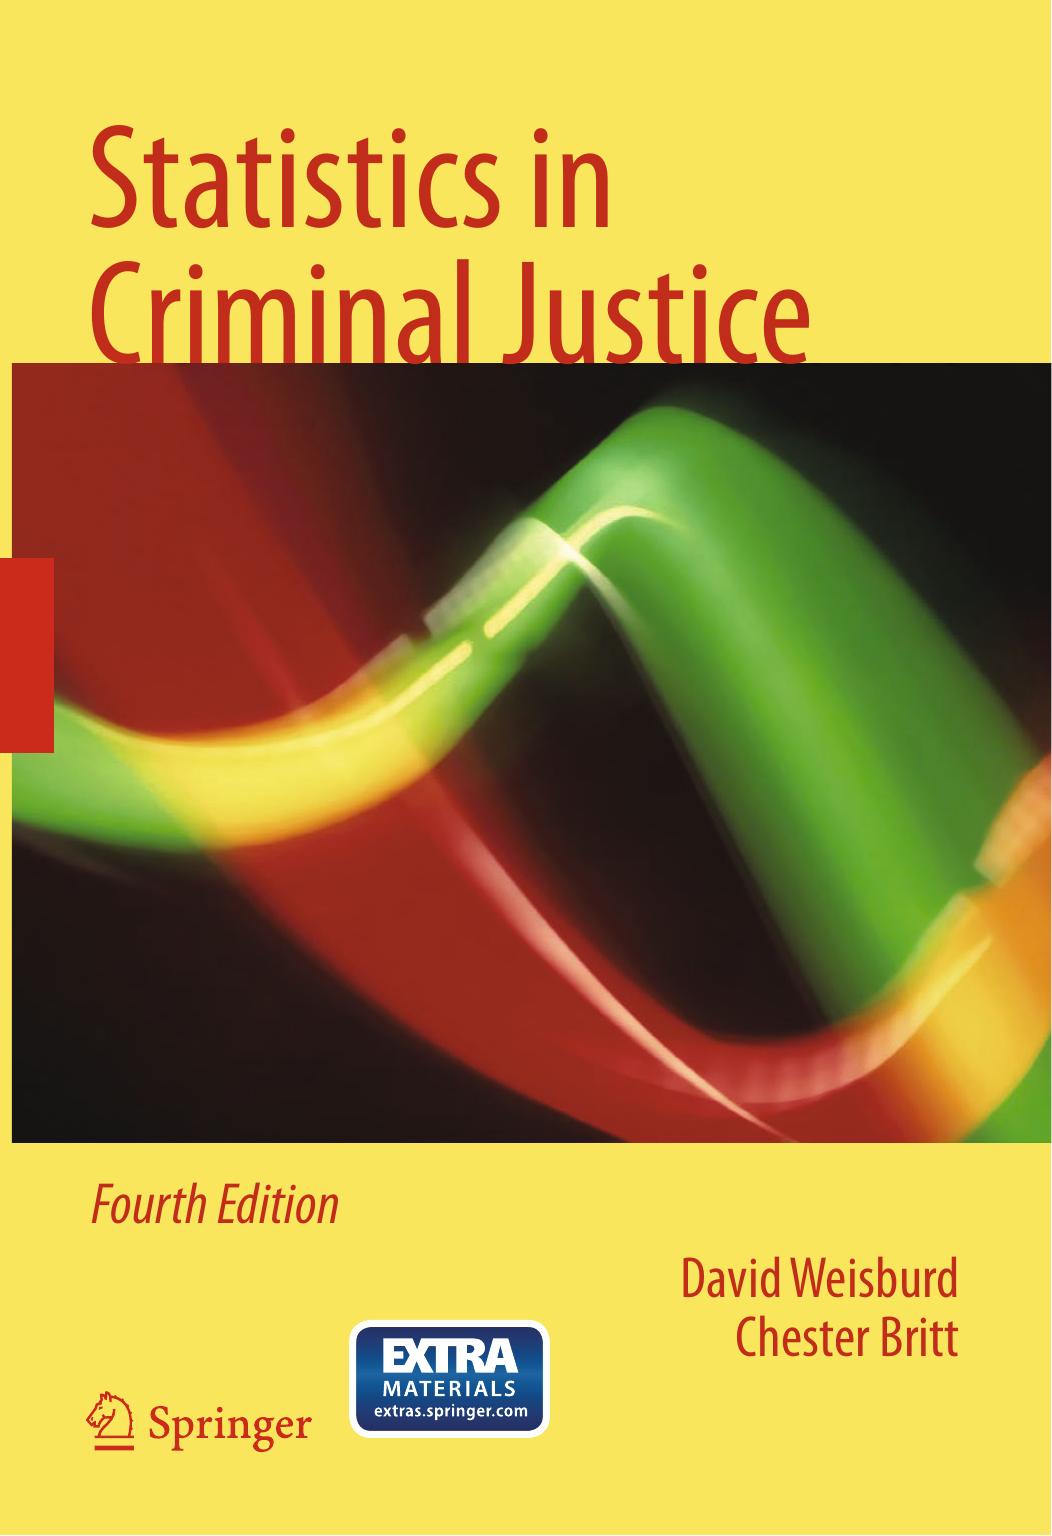 Statistics in Criminal Justice by David Weisburd & Chester Britt